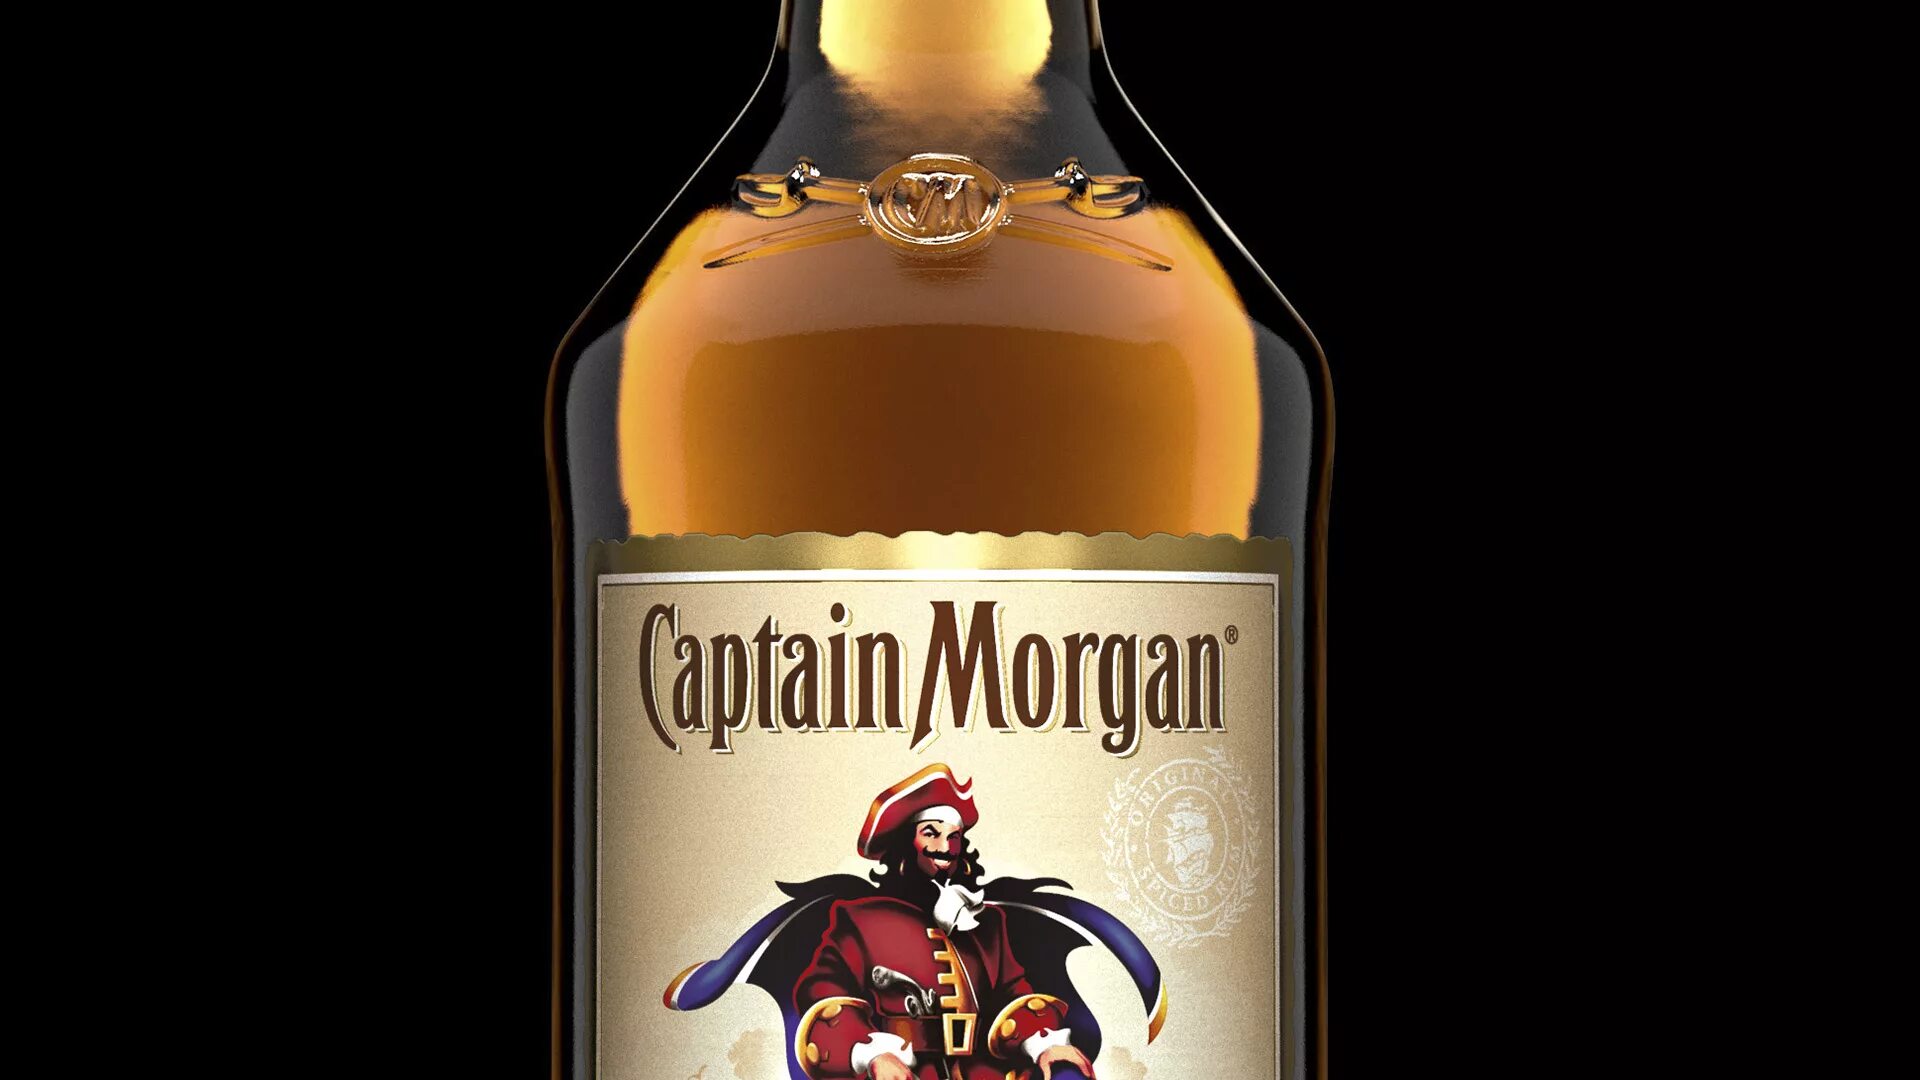 Кэптен Морган Ром. Виски Captain Morgan. Ром Джек Морган.